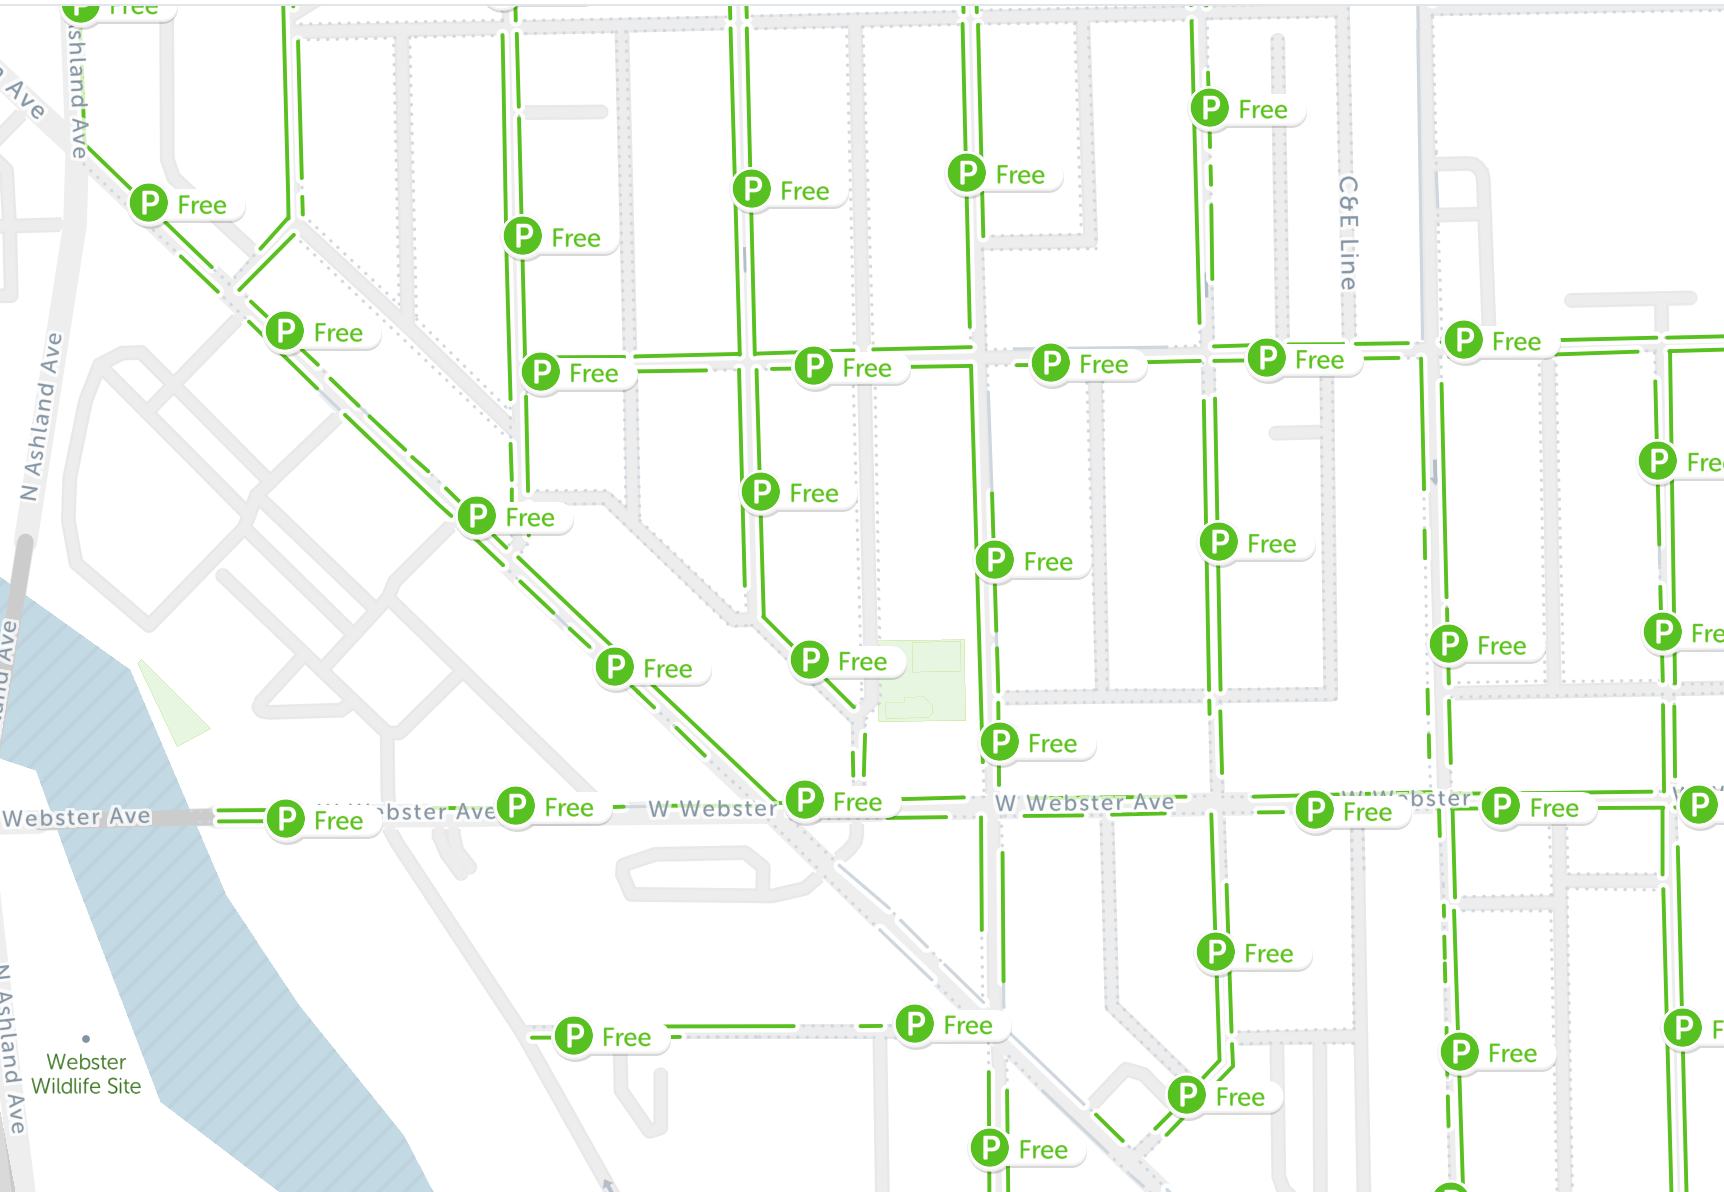 2023 : Map of Free Parking in Chicago - SpotAngels